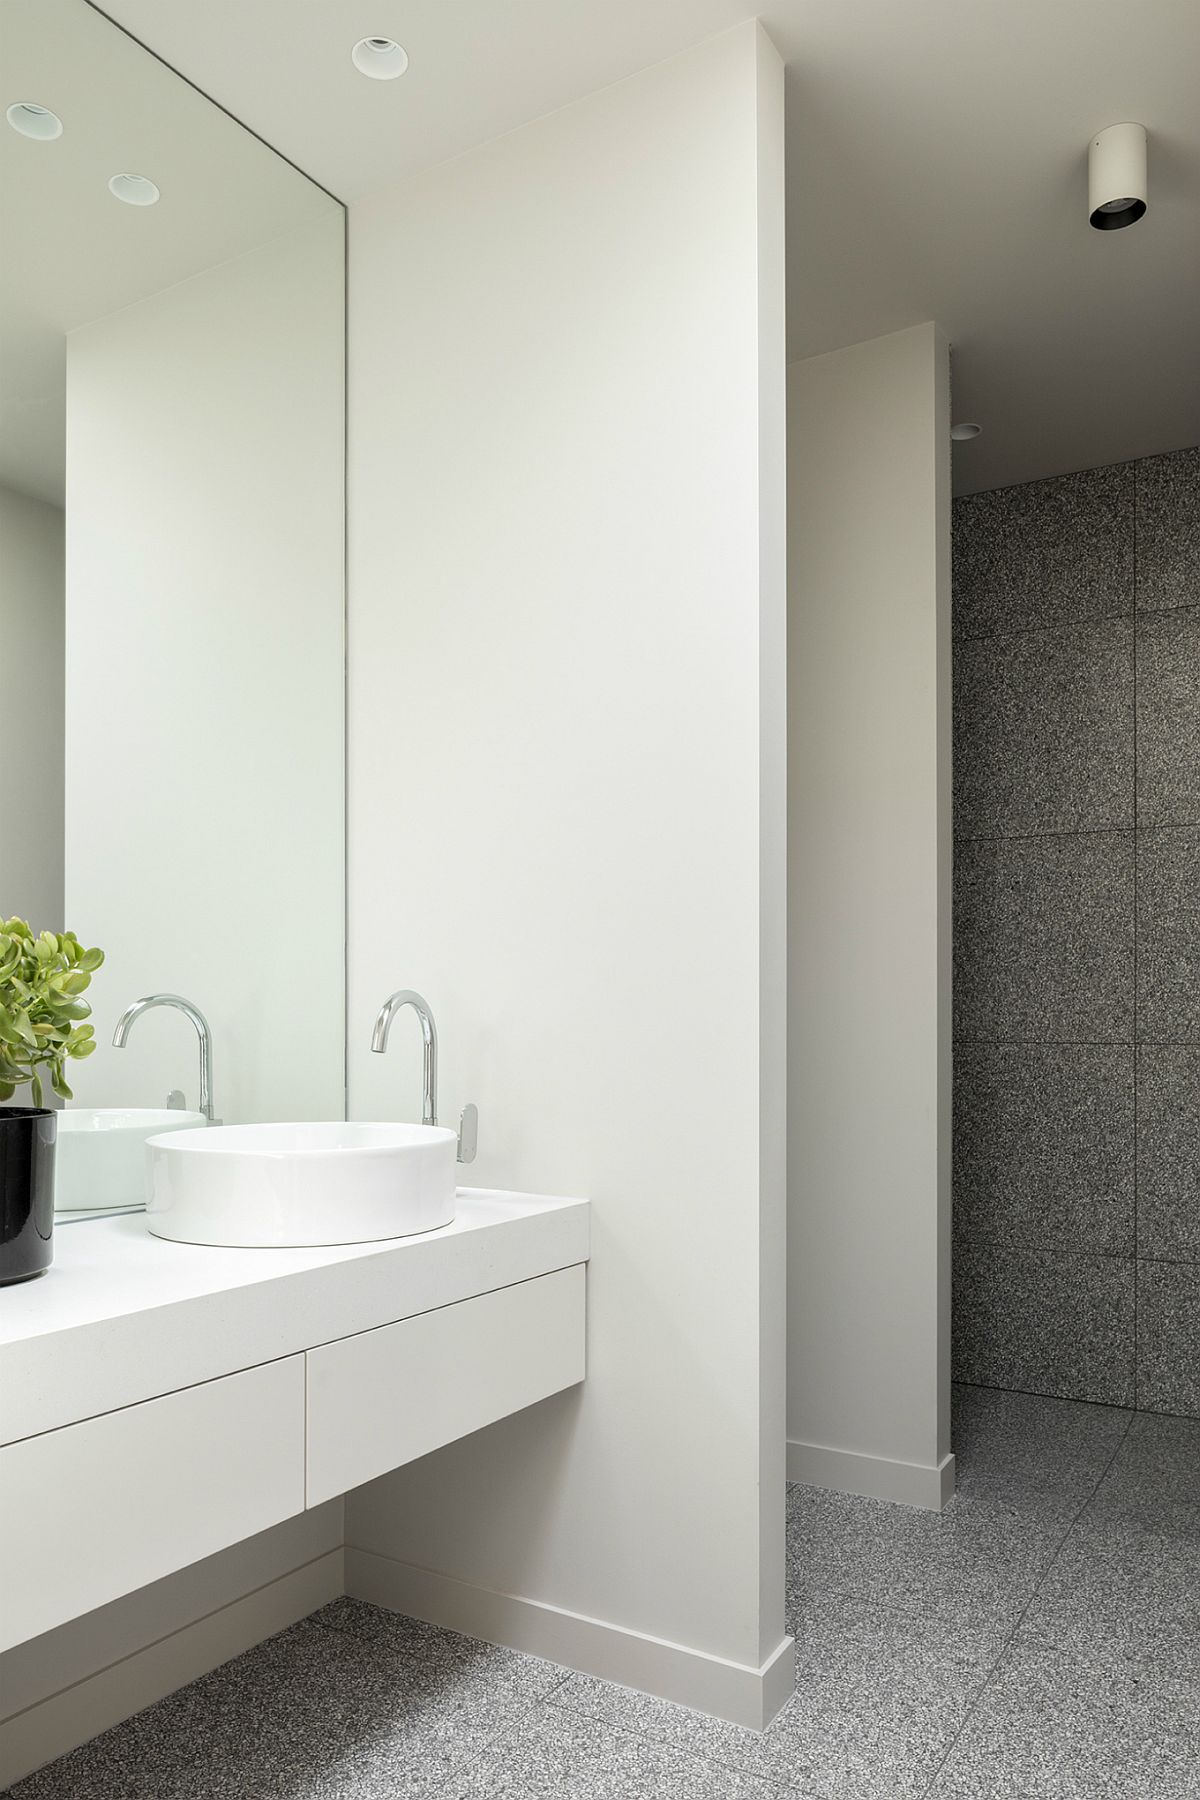 Polished-modern-bathroom-in-stone-and-white